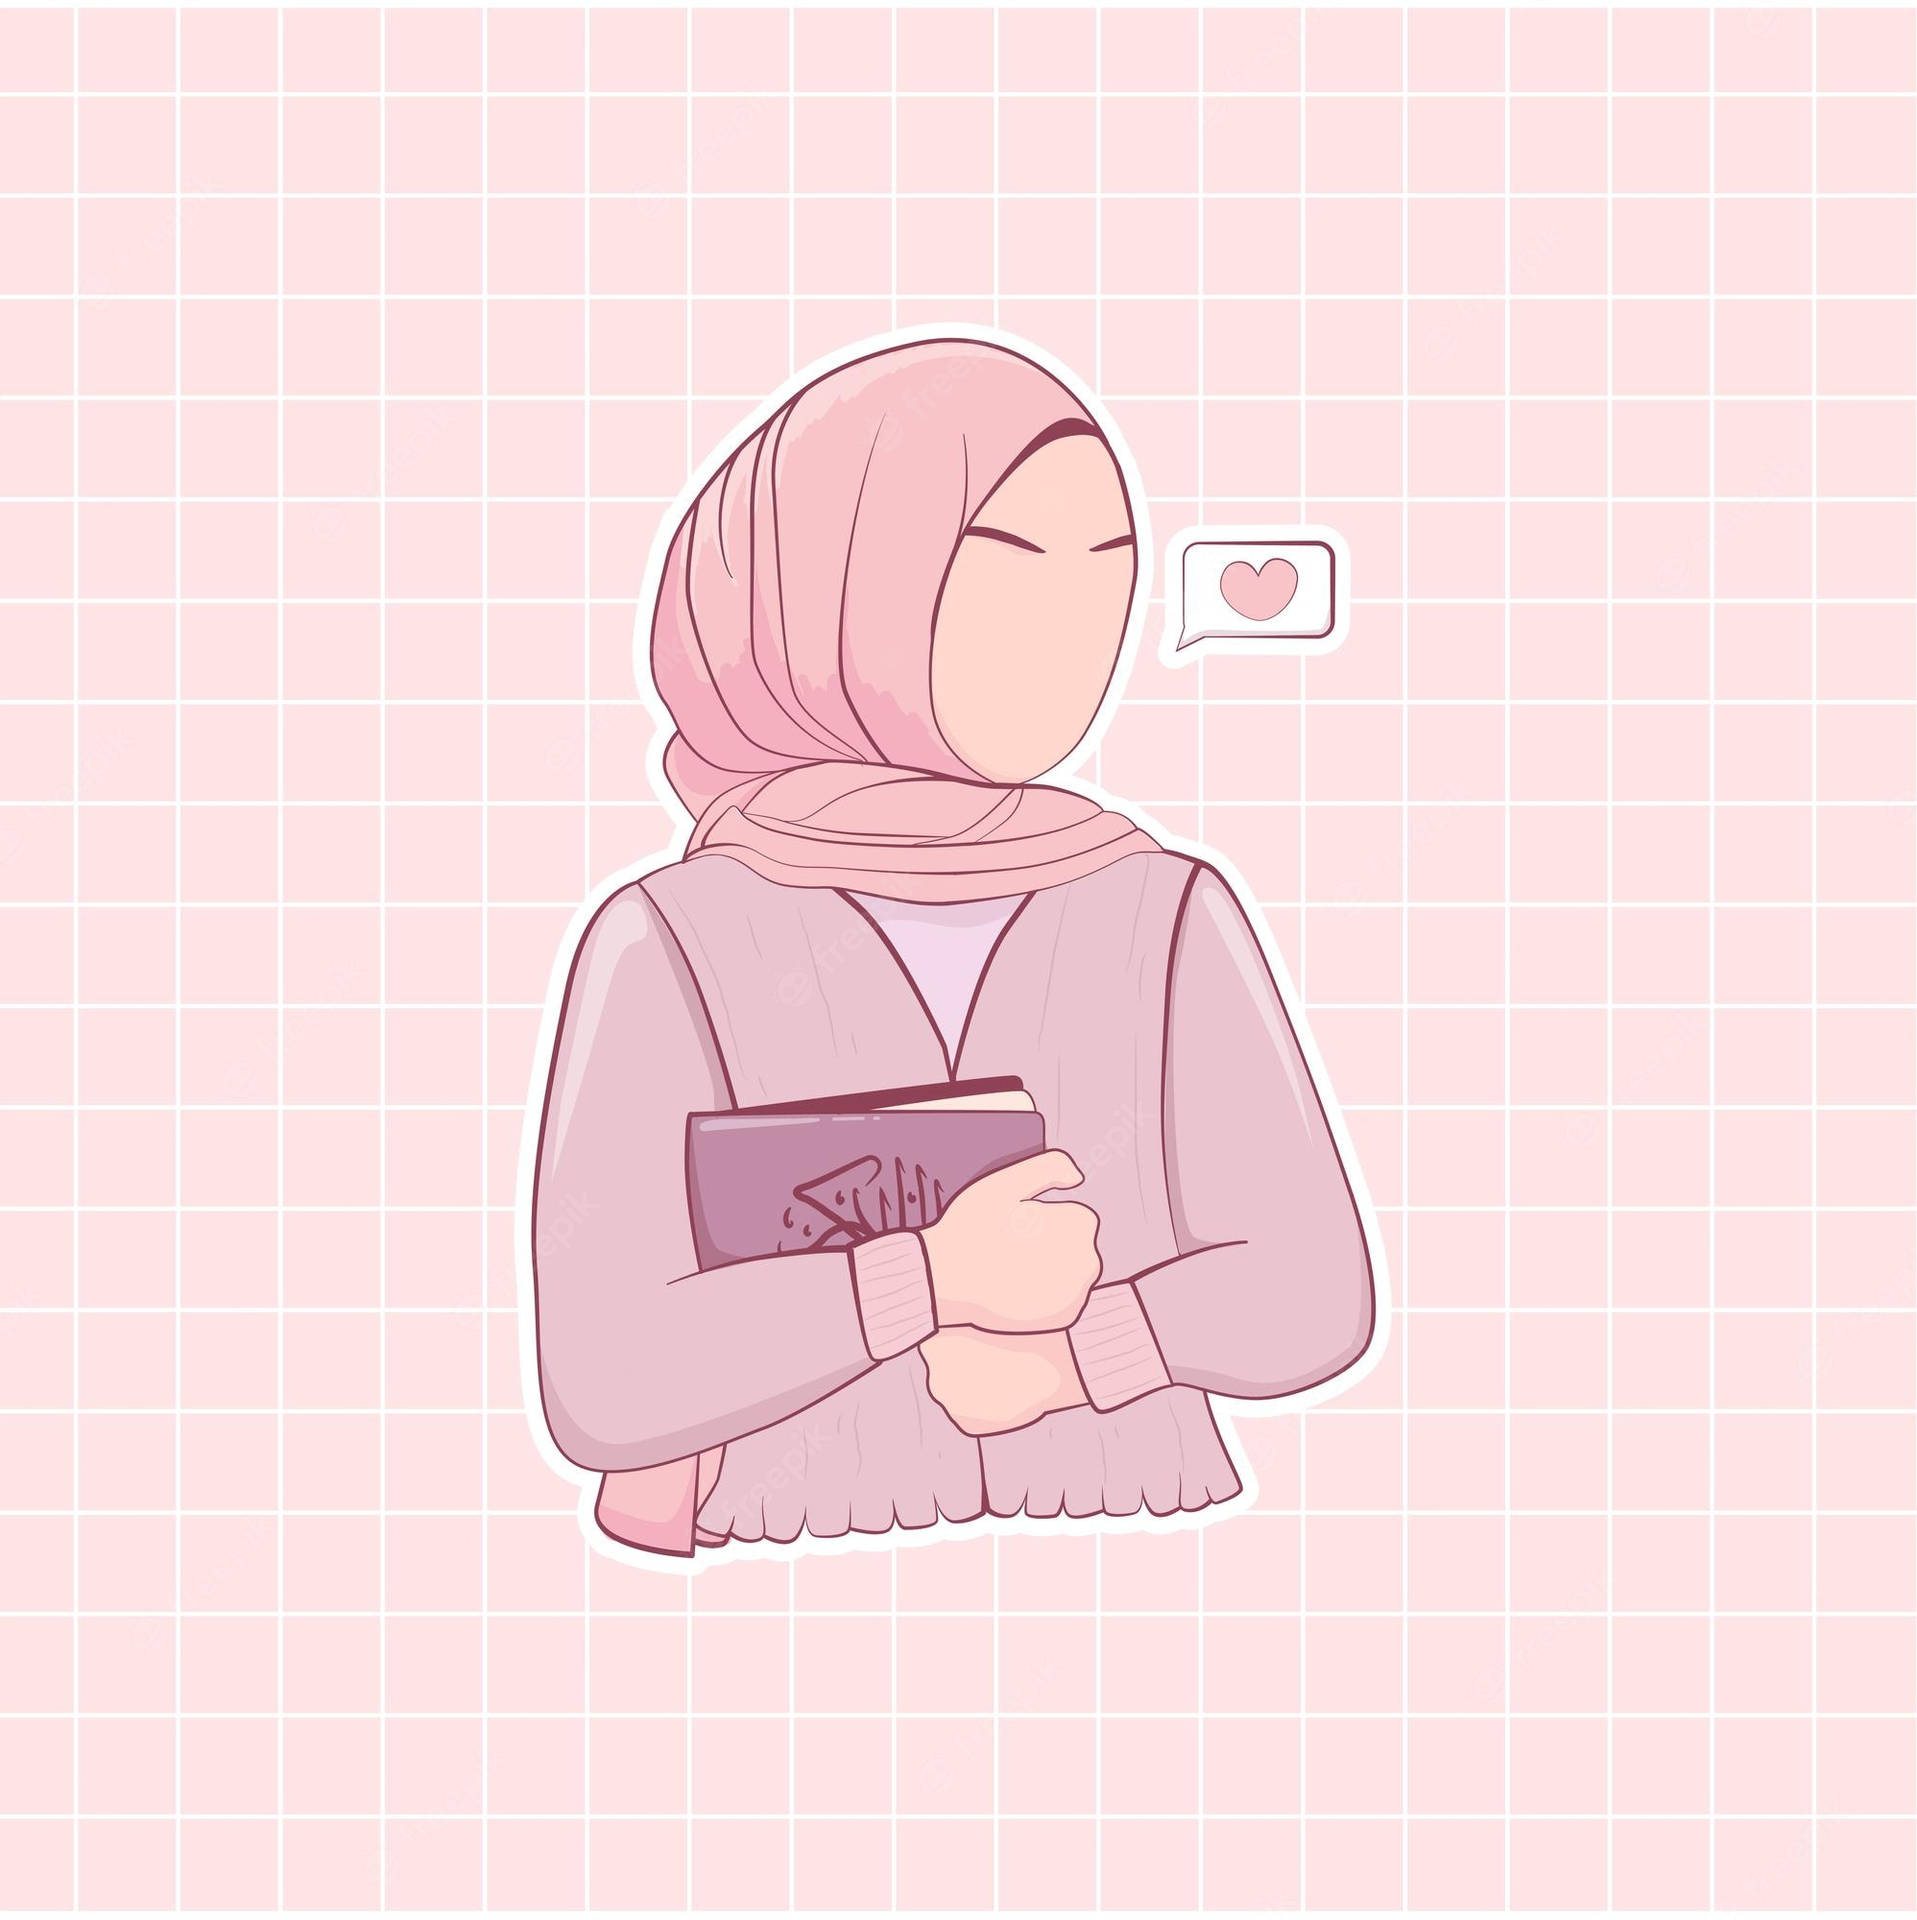 Pfp Aesthetic Muslim Girl With Notebook Wallpaper